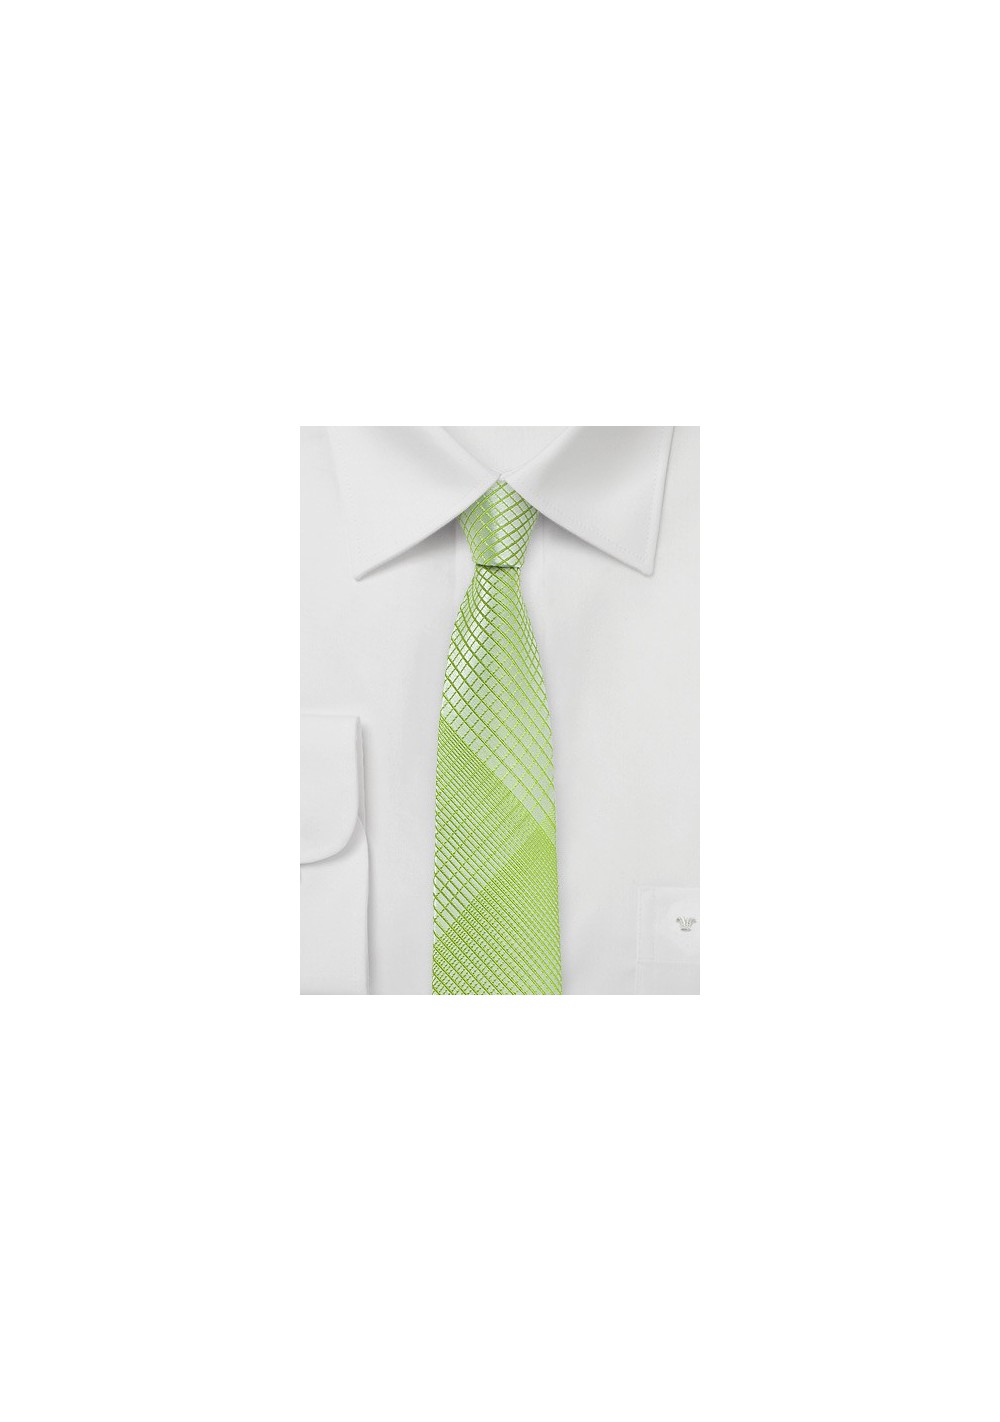 Daiquiri Green Skinny Tie with Plaids